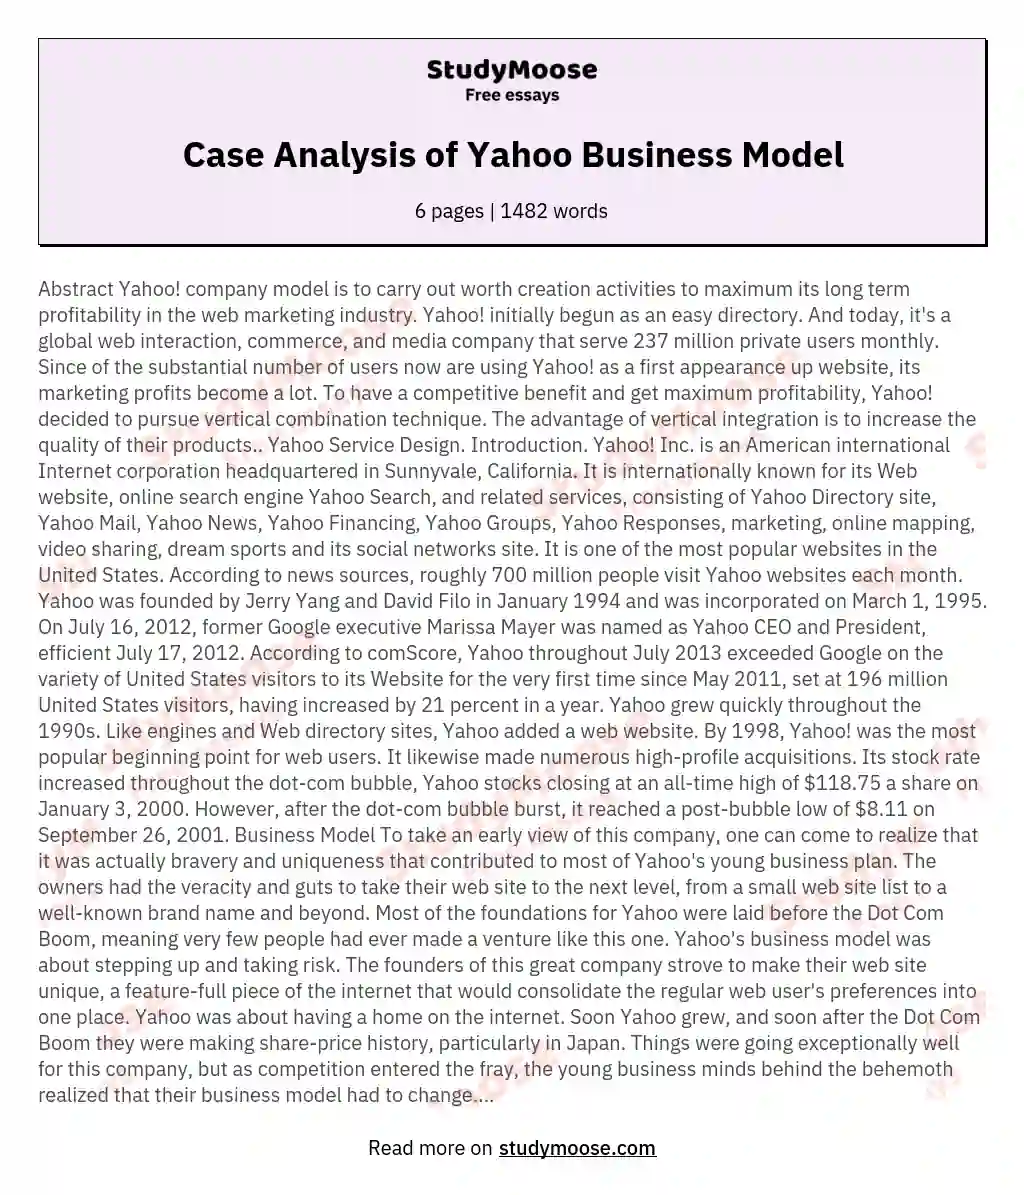 Case Analysis of Yahoo Business Model essay